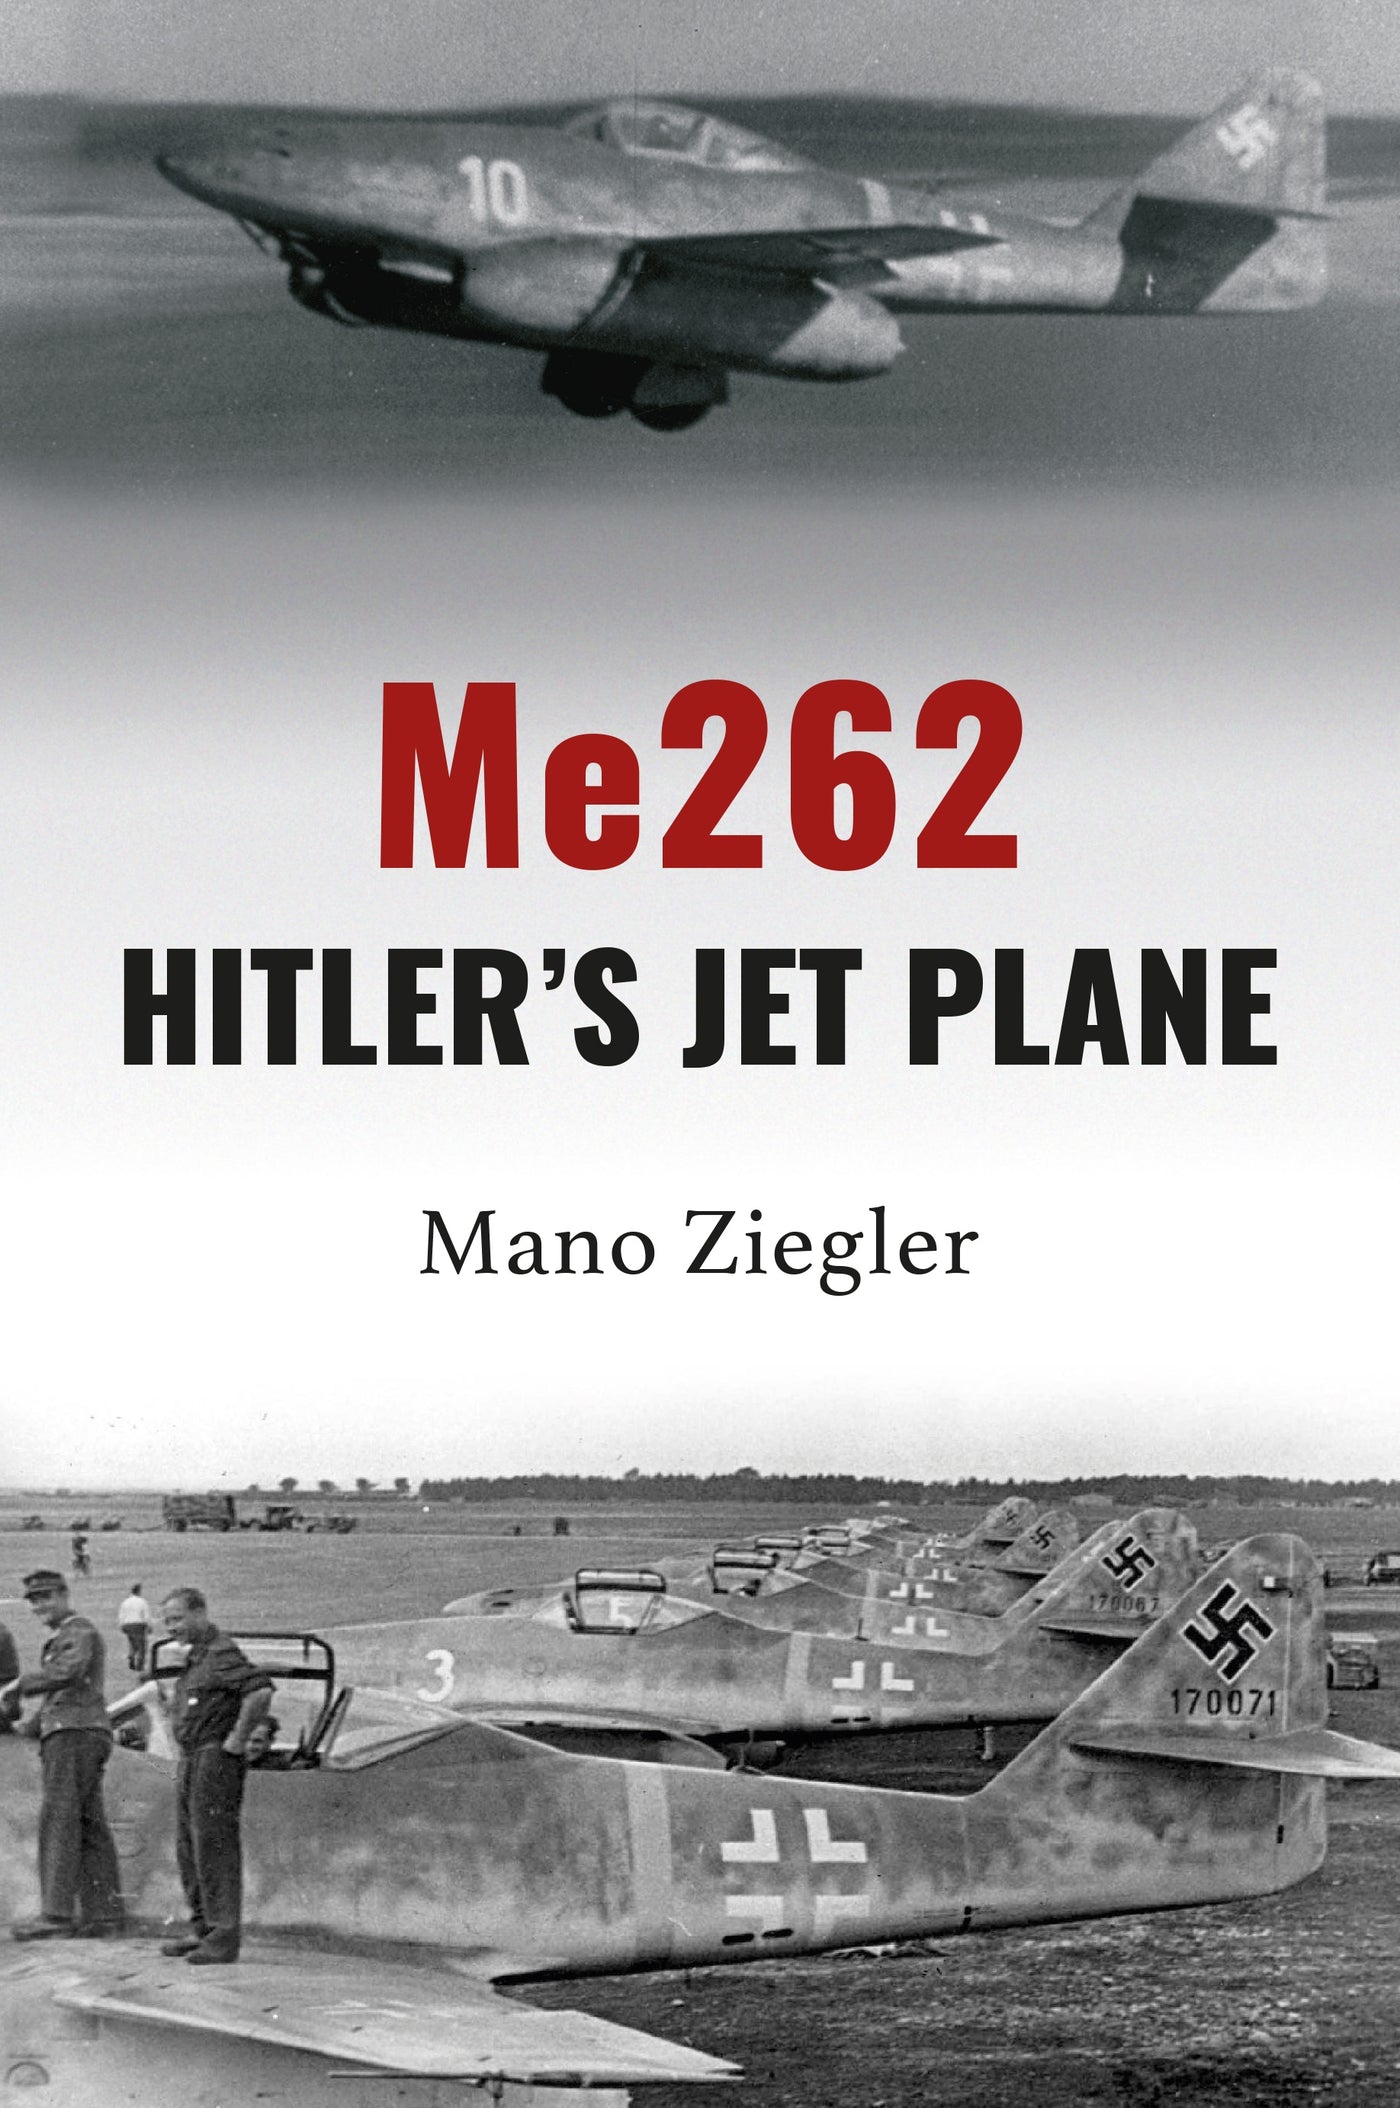 Me262: Hitler's Jet Plane